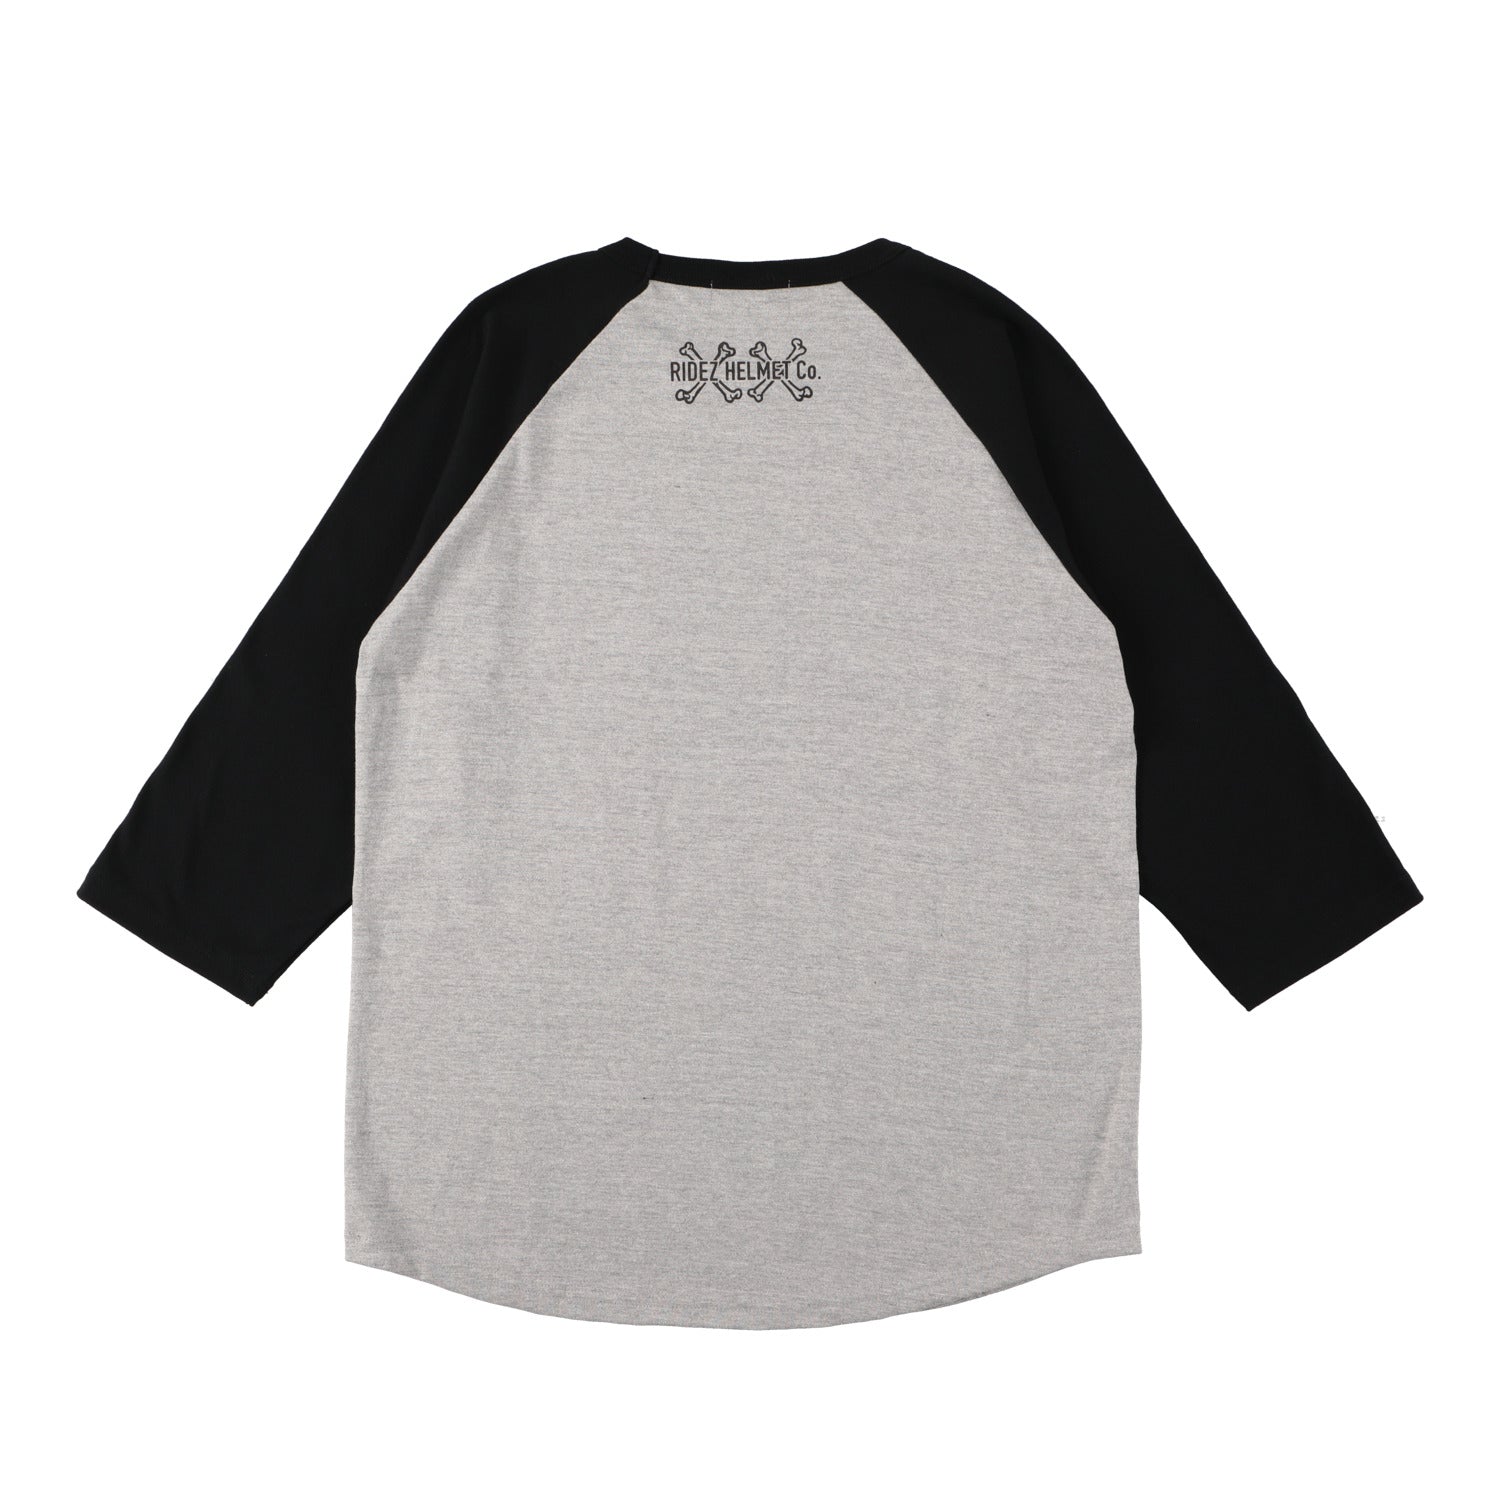 RIDEZ XX 3/4 Sleeve T-shirt RD7006 